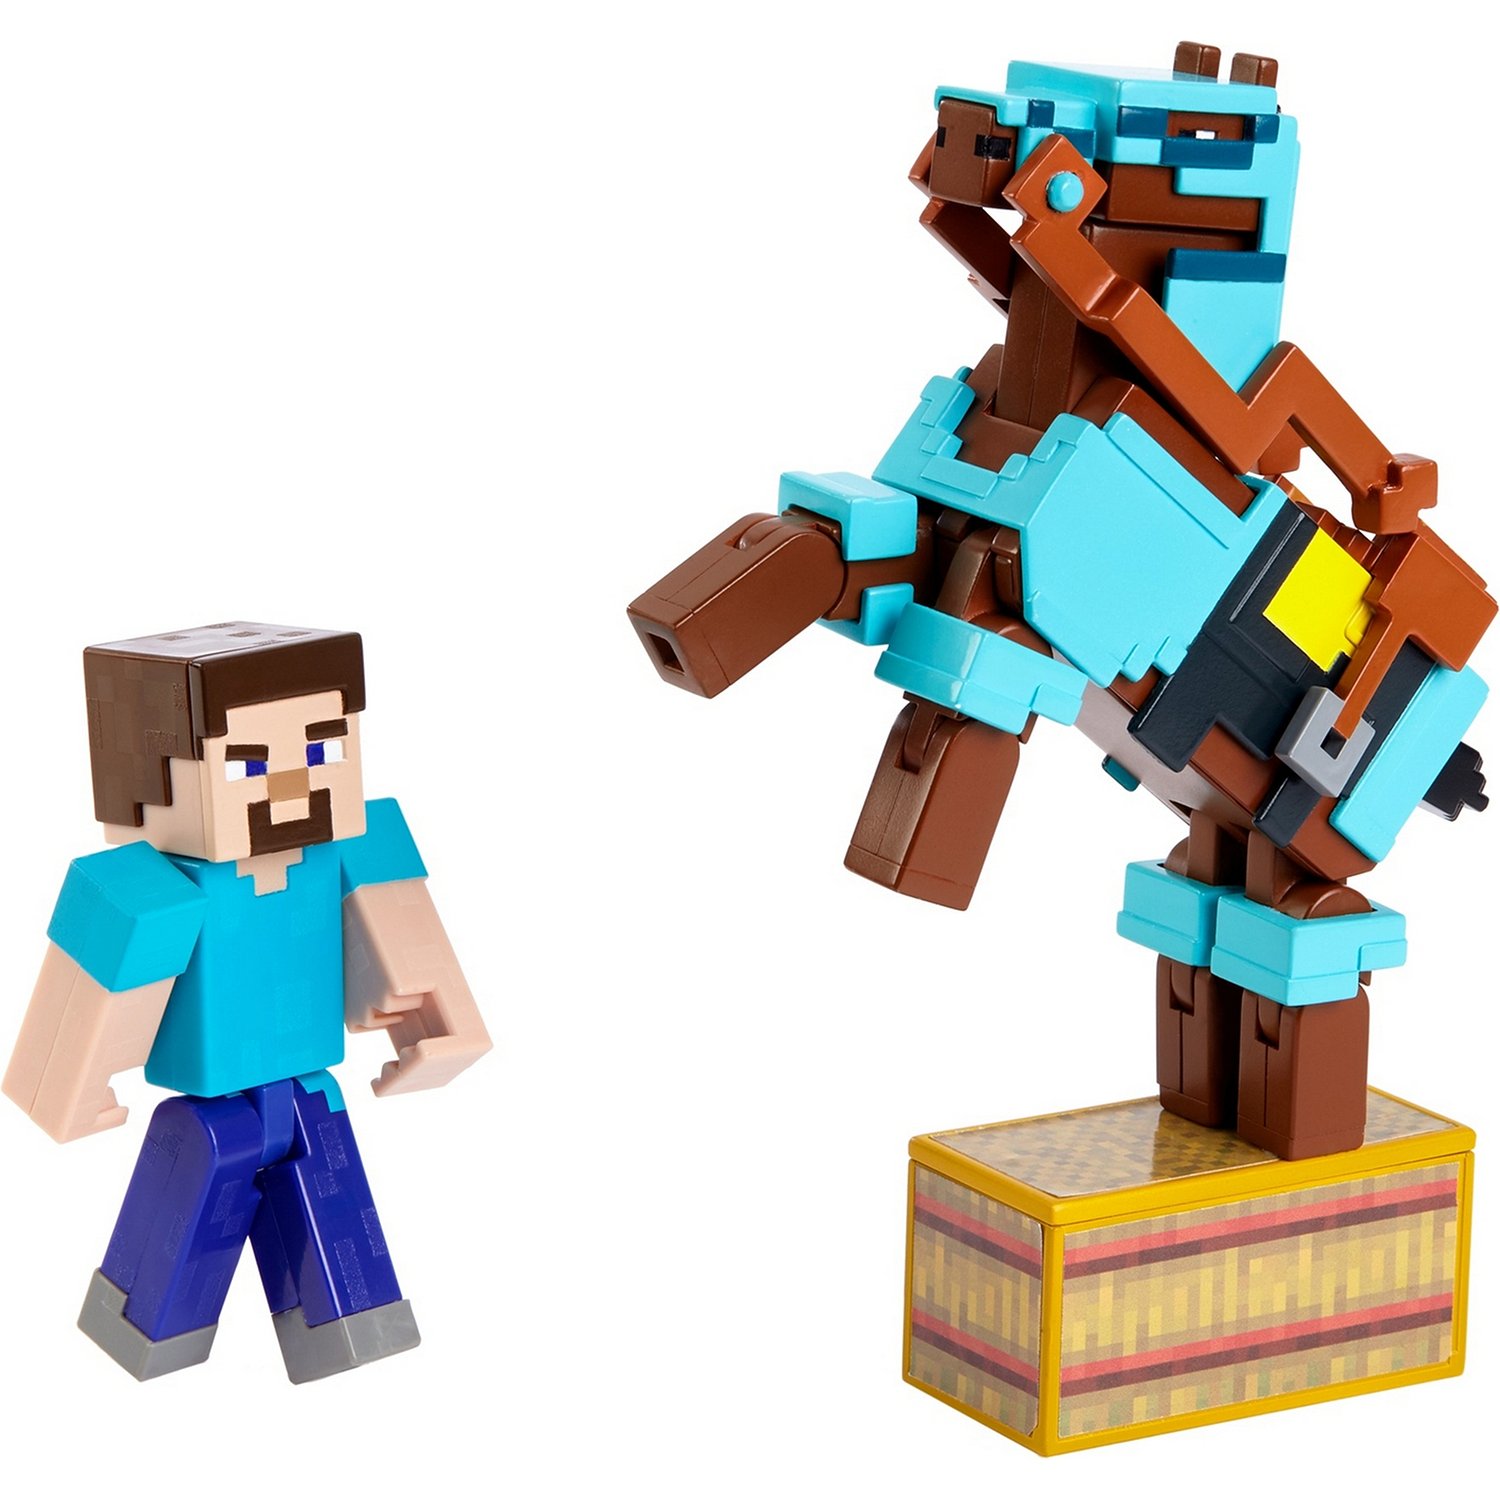 Фигурка нубика. Набор фигурок Minecraft Стив и лошадь в броне glc78. Майнкрафт набор Стив и конь. Фигурки майнкрафт Mattel gcp33. Легомайгкрафтсьтиф вбране.